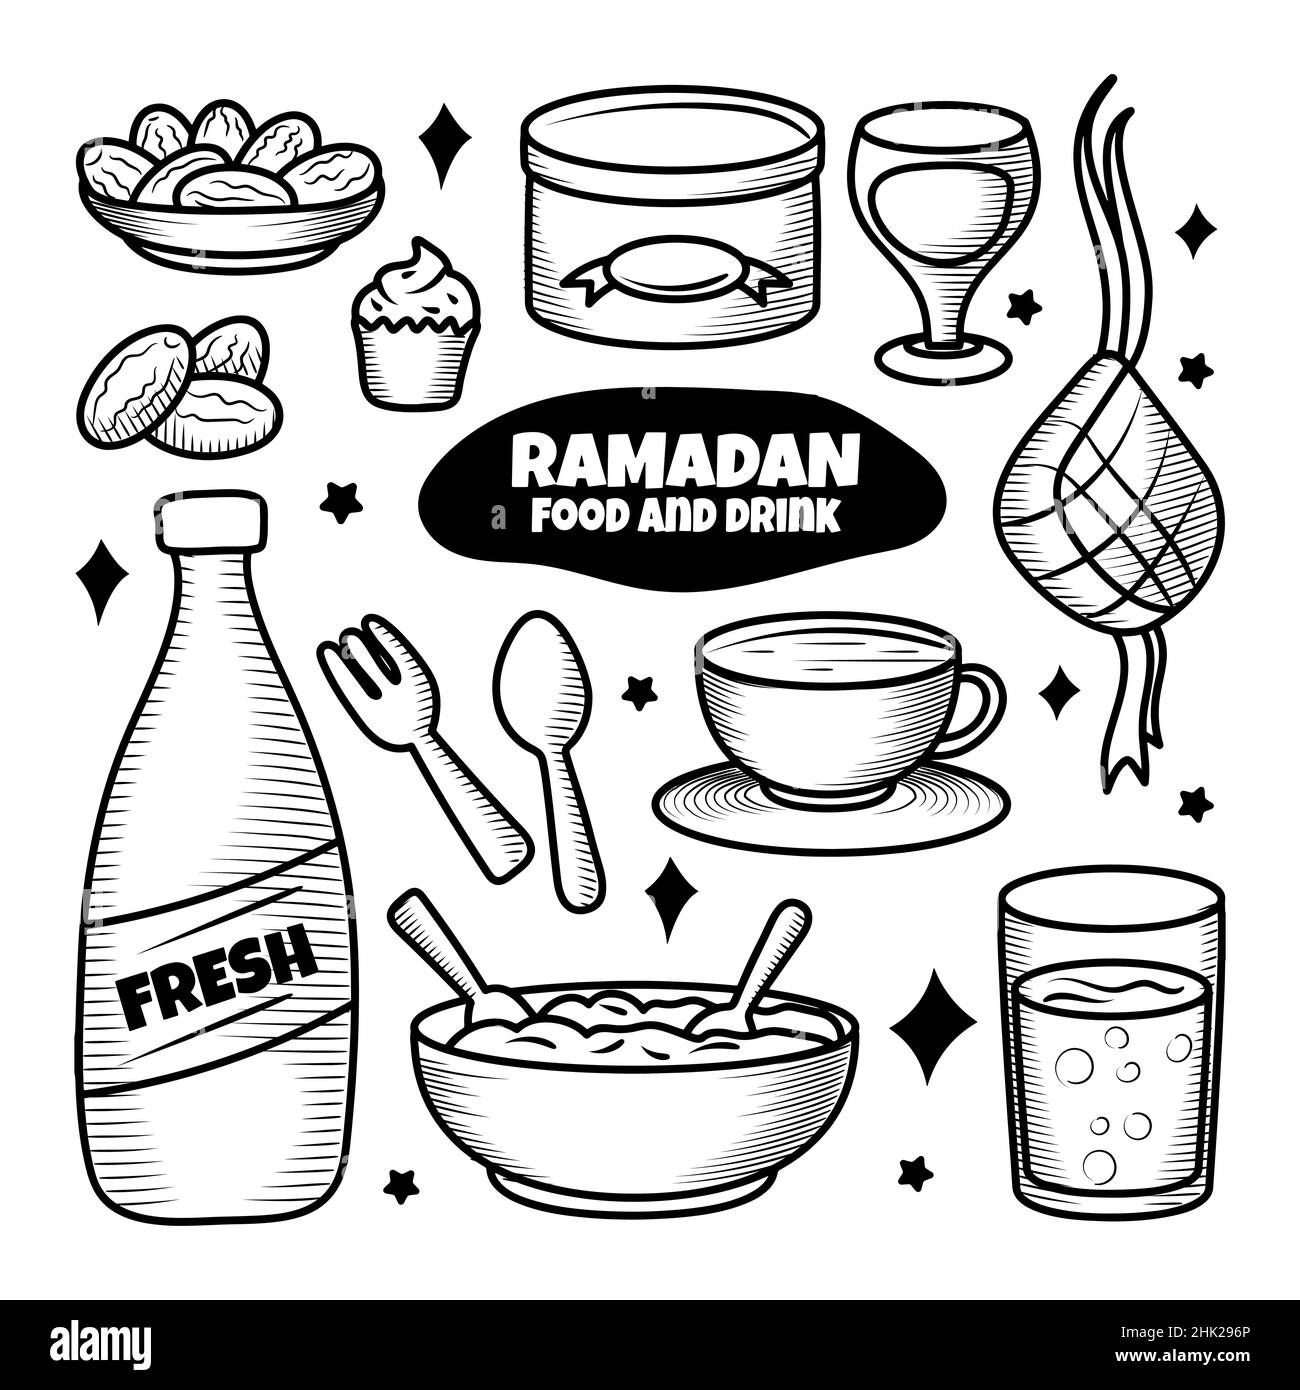 Hand Drawn Doodle Ramadan Kareem Food And Drink Elements Illustration